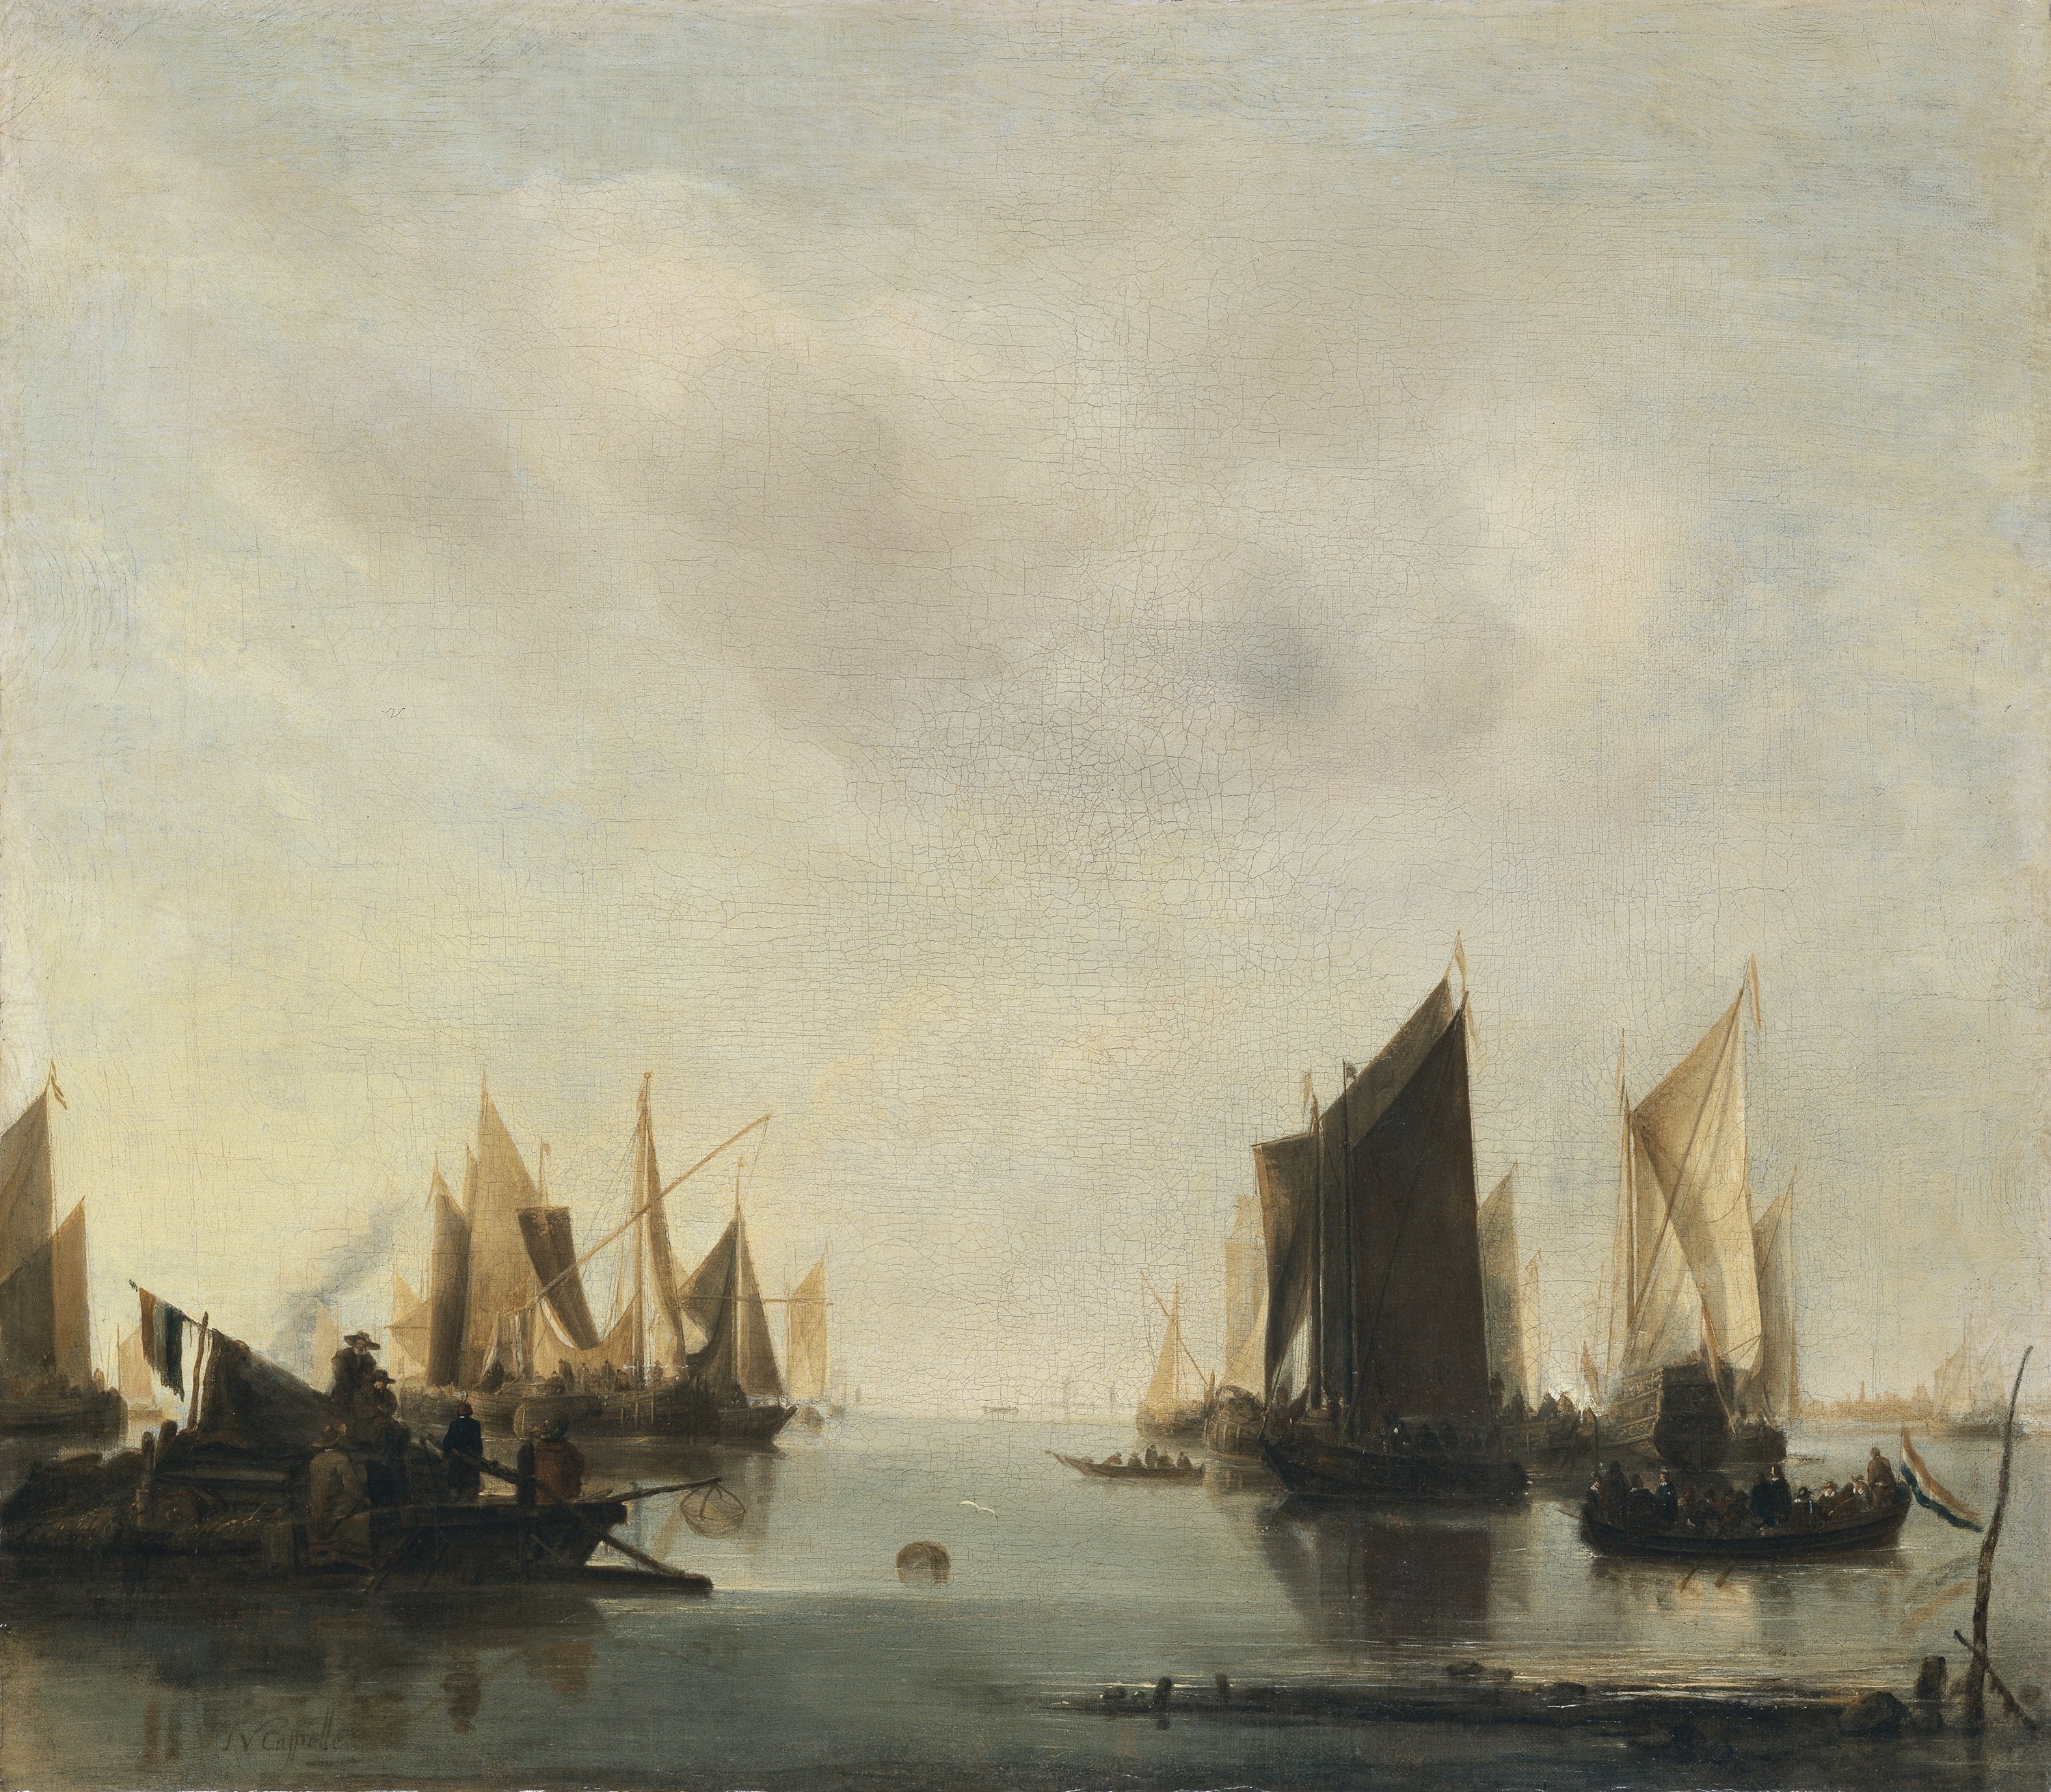 Coastal Scene with Sailing Vessels. Marina con Veleros, 1655-1660